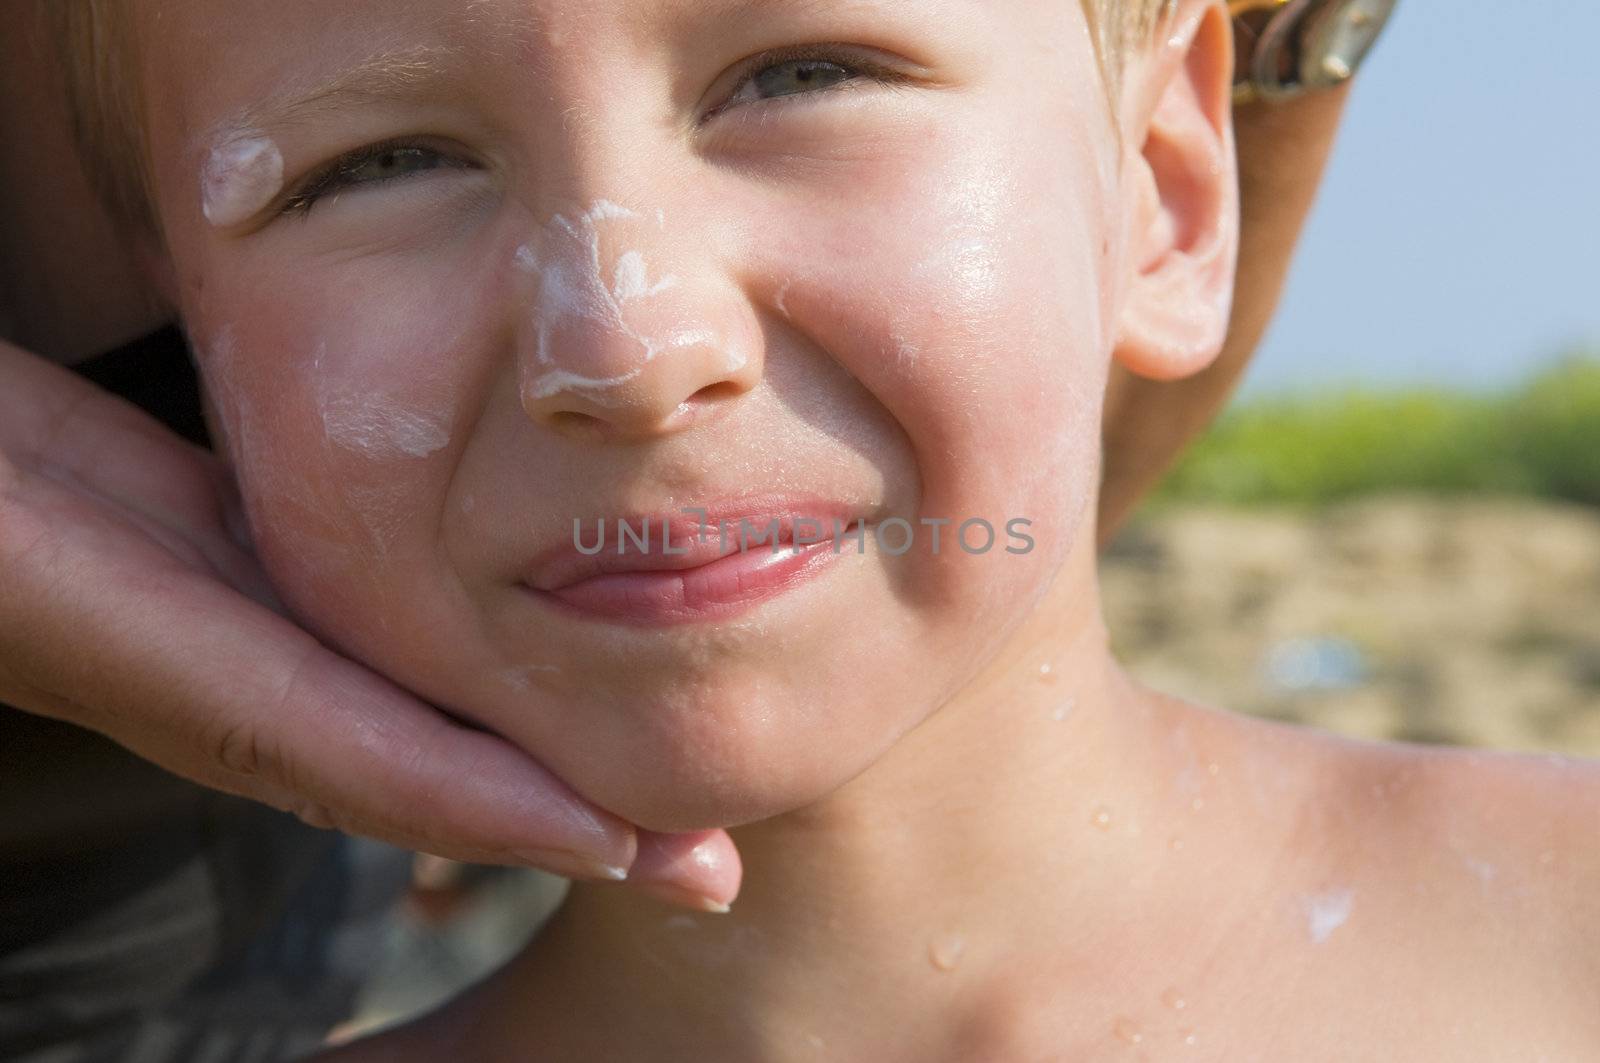 The boy smear with a cream from sunburn